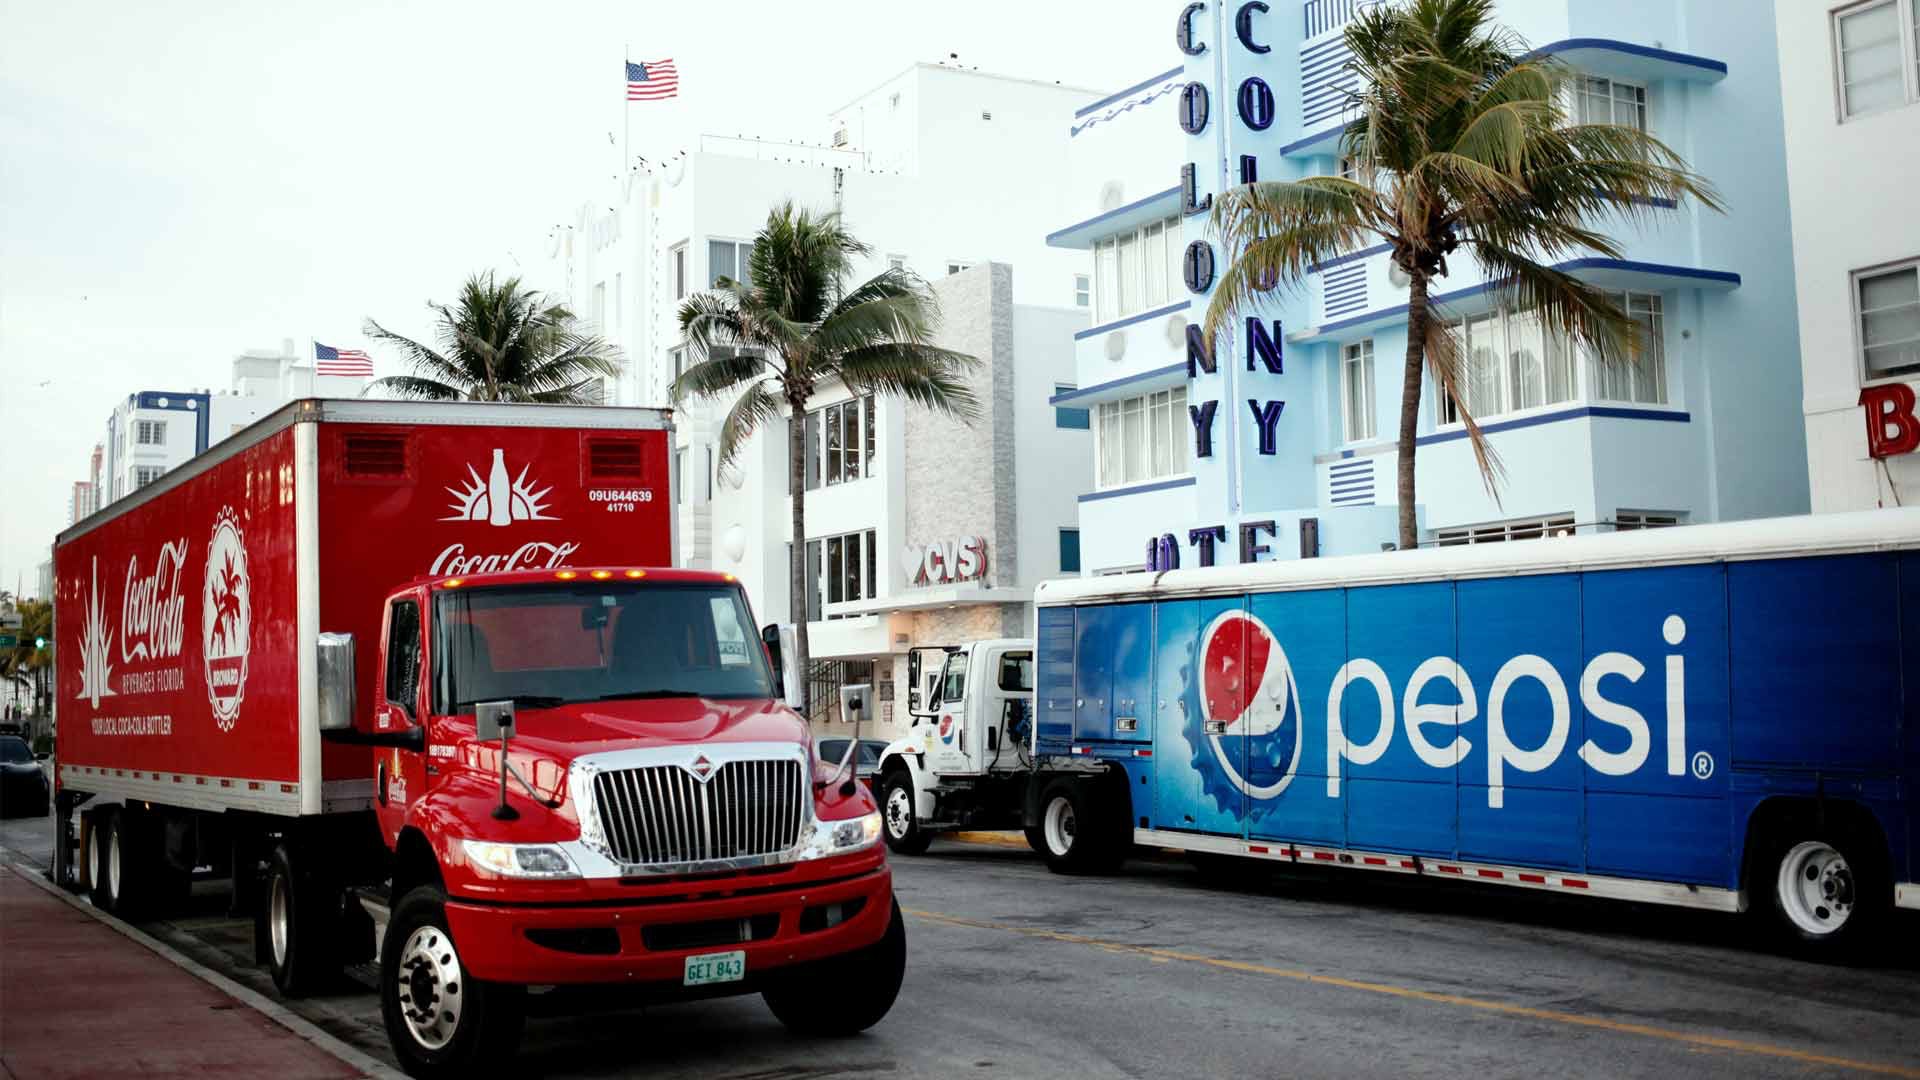 Coca Cola and Pepsi Trucks on Street